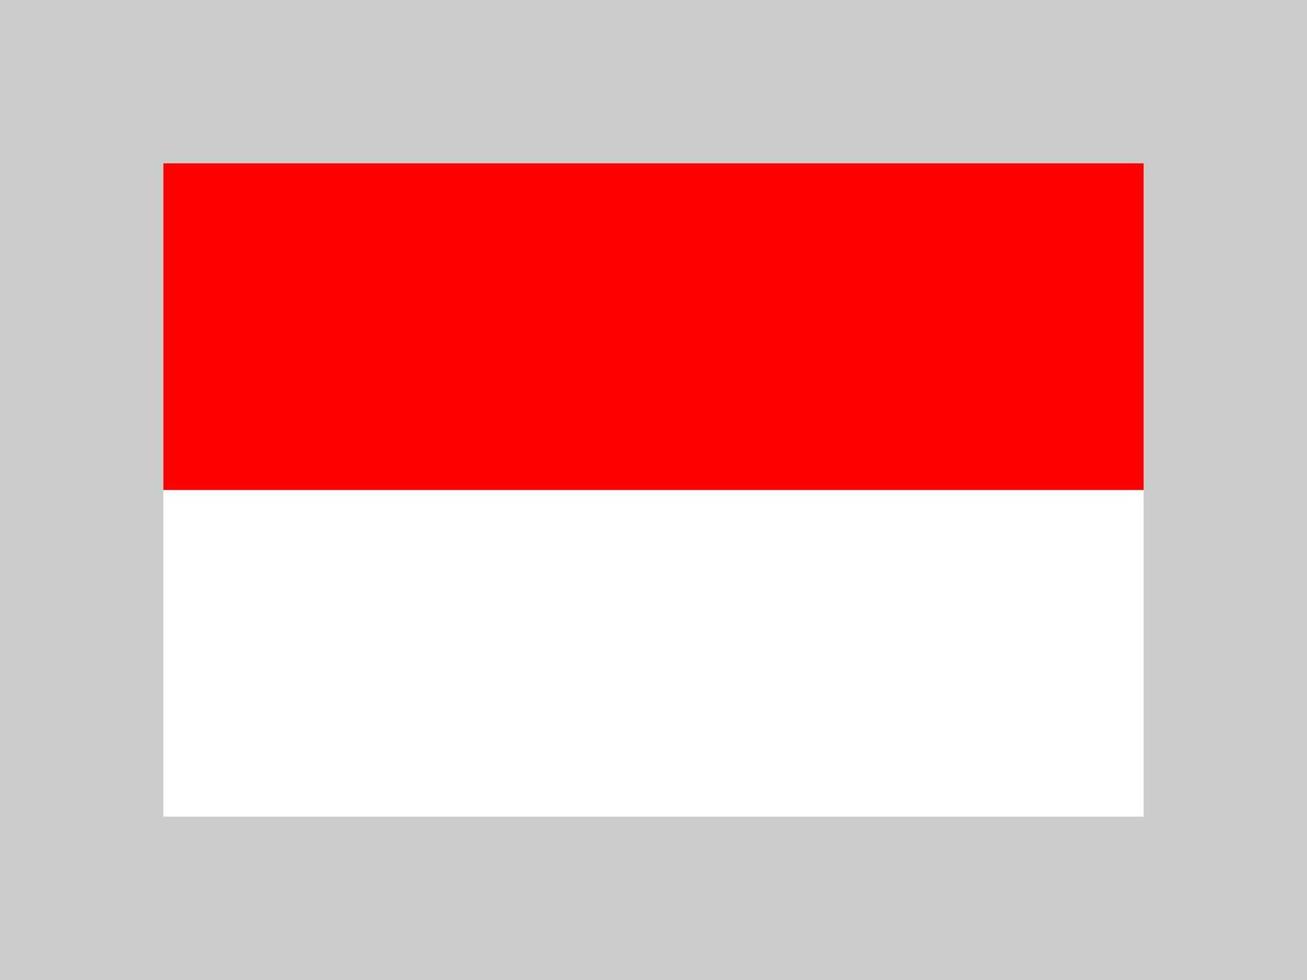 Indonesien-Flagge, offizielle Farben und Proportionen. Vektor-Illustration. vektor